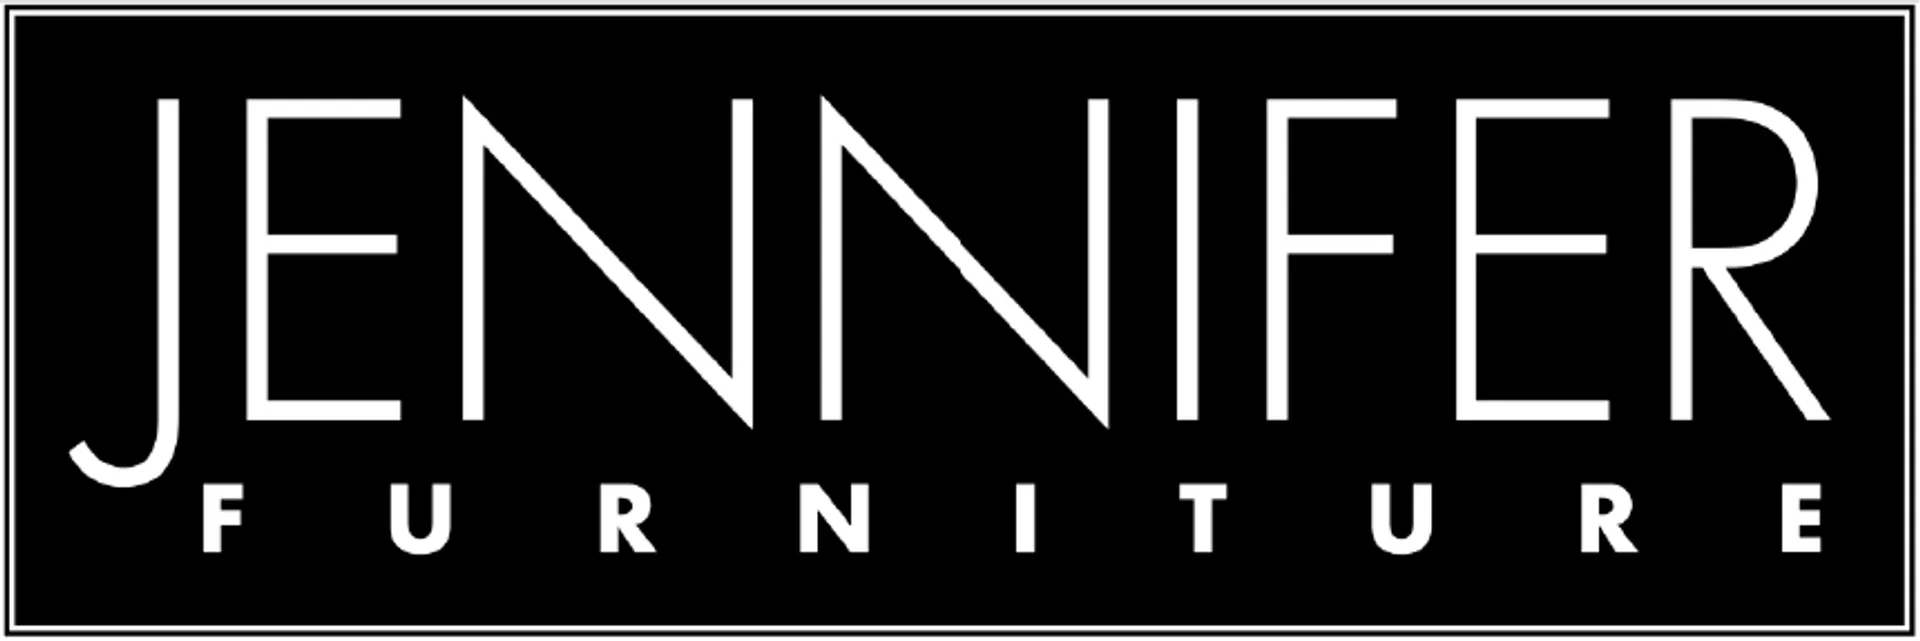 JENNIFER FURNITURE logo